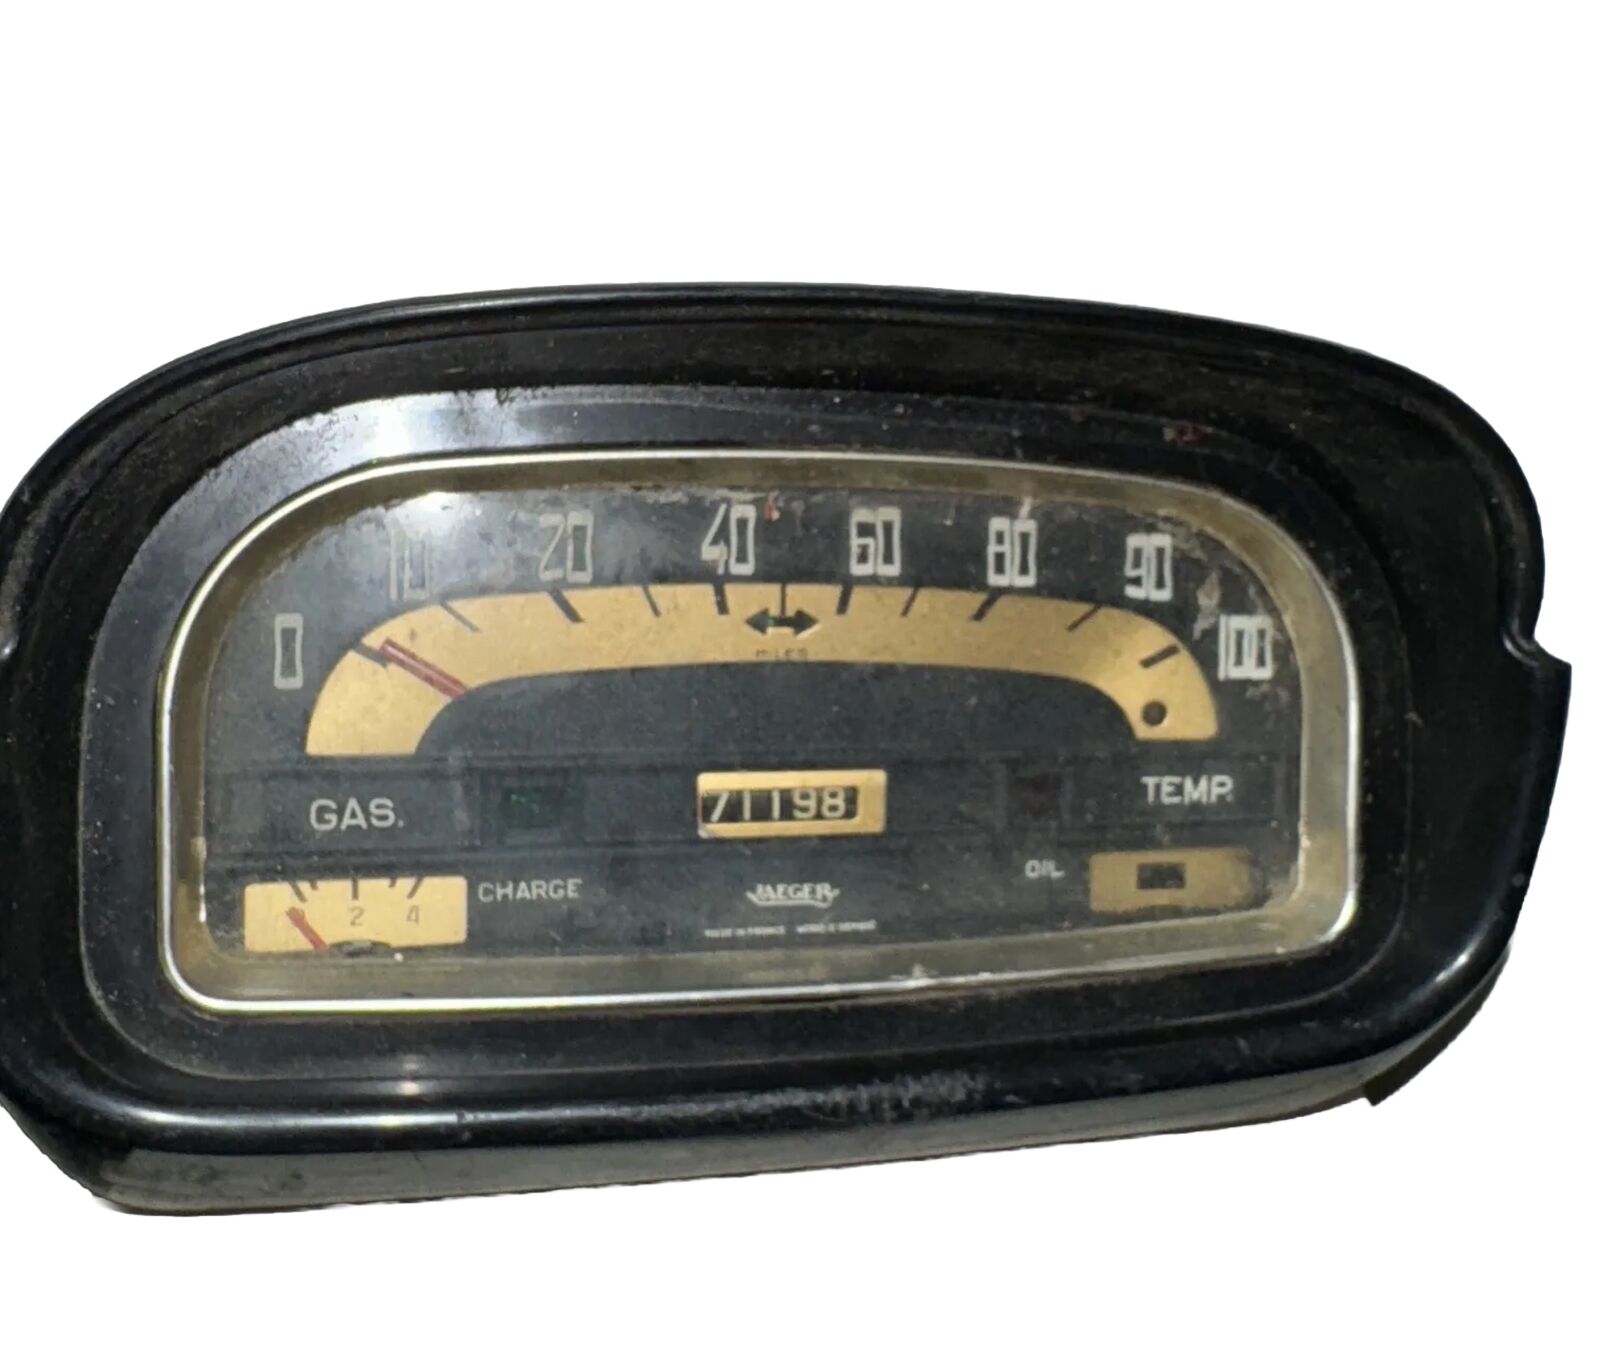 RENAULT DAUPHINE GORDINI speedometer Jaeger English version